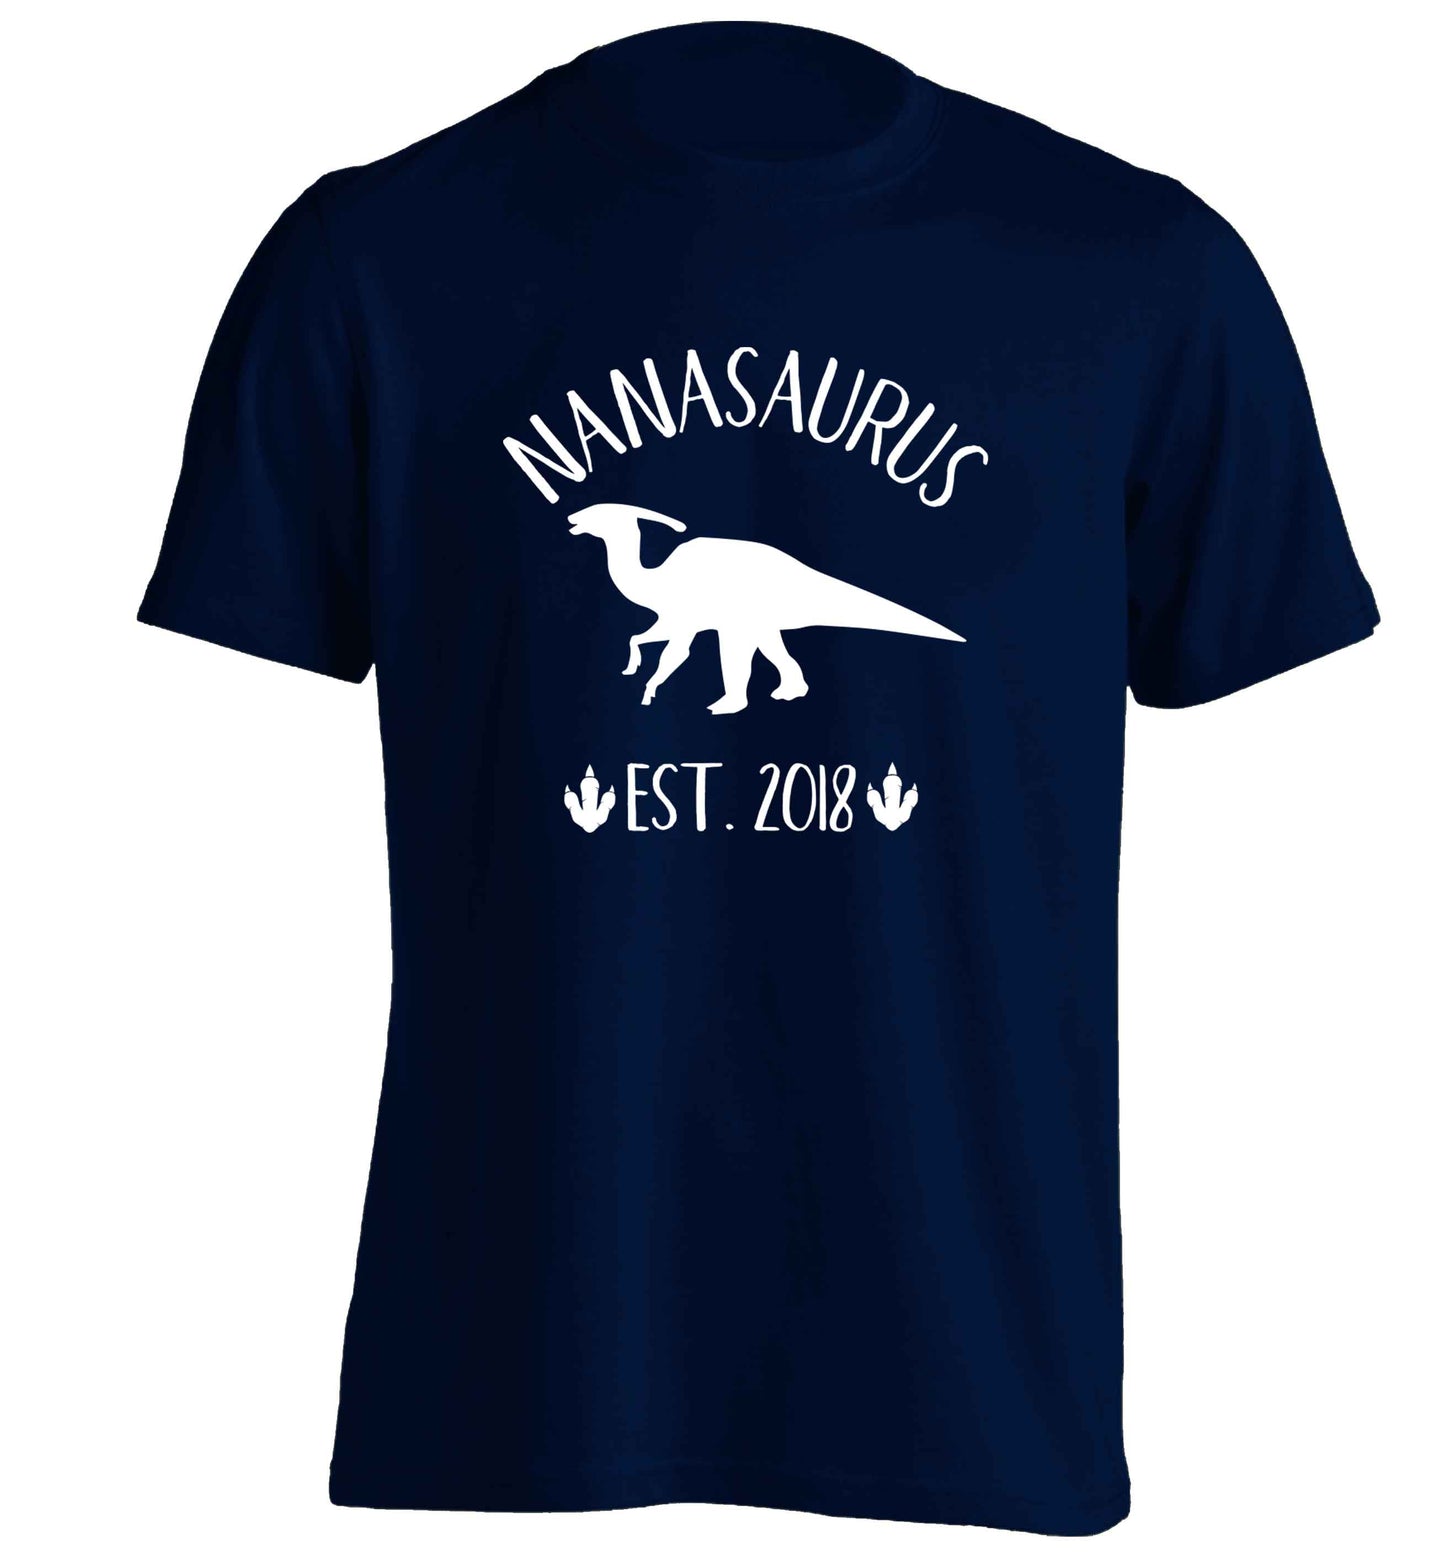 Personalised nanasaurus since (custom date) adults unisex navy Tshirt 2XL